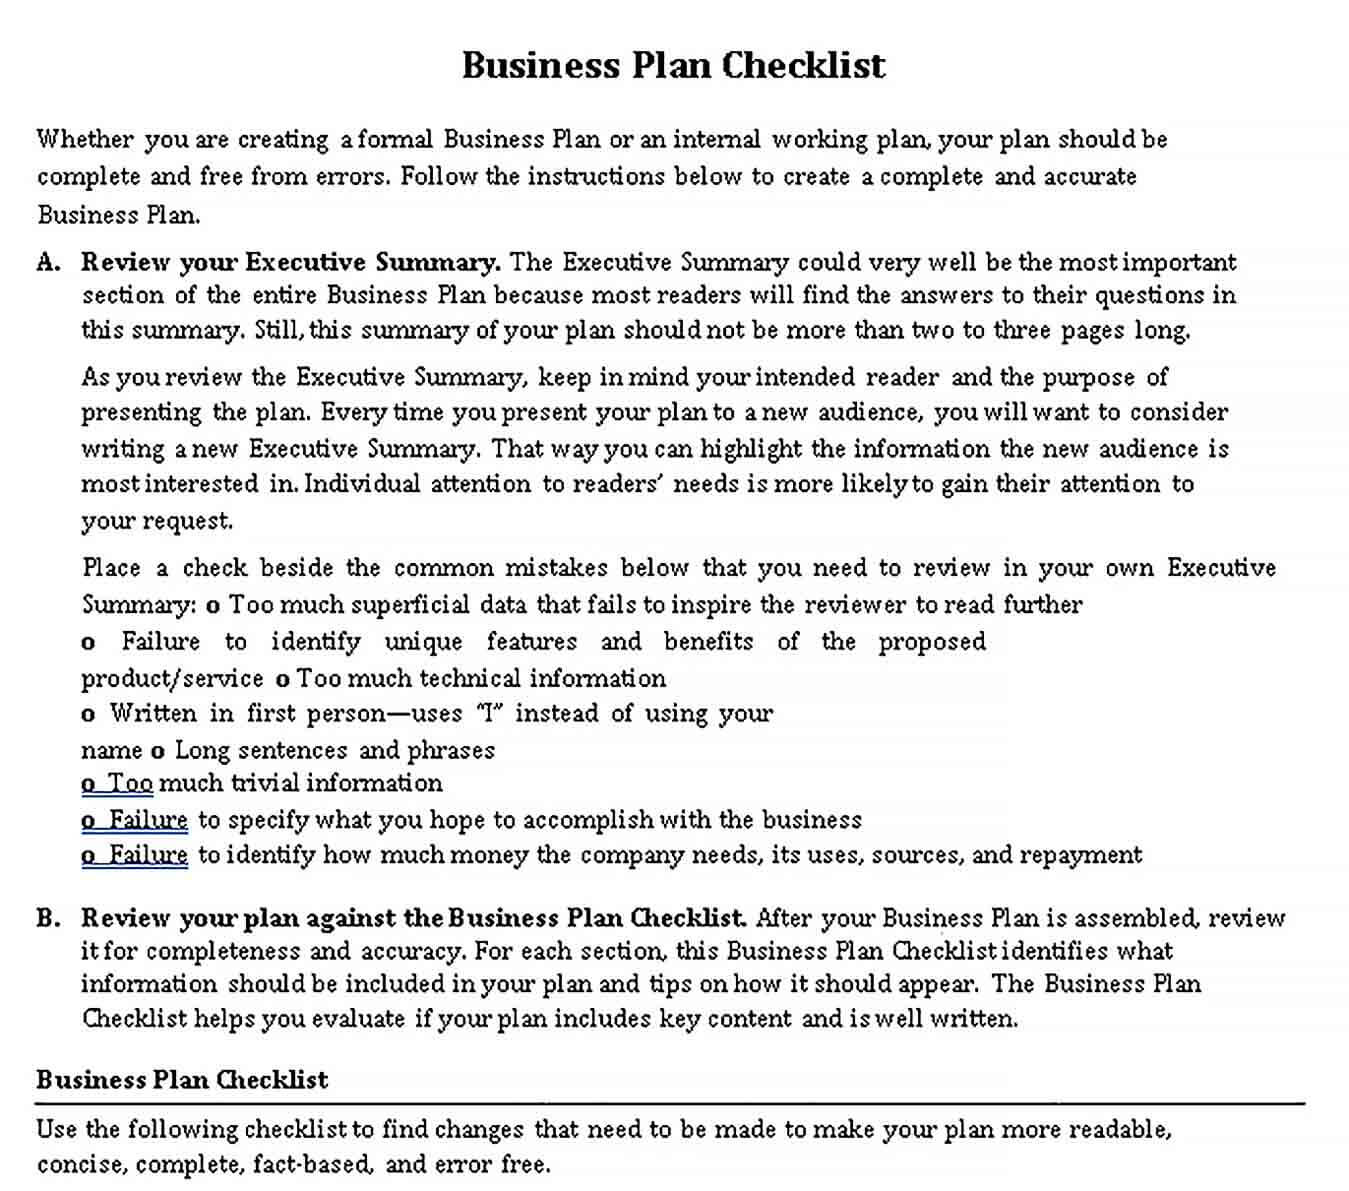 Sample Business Plan Checklist